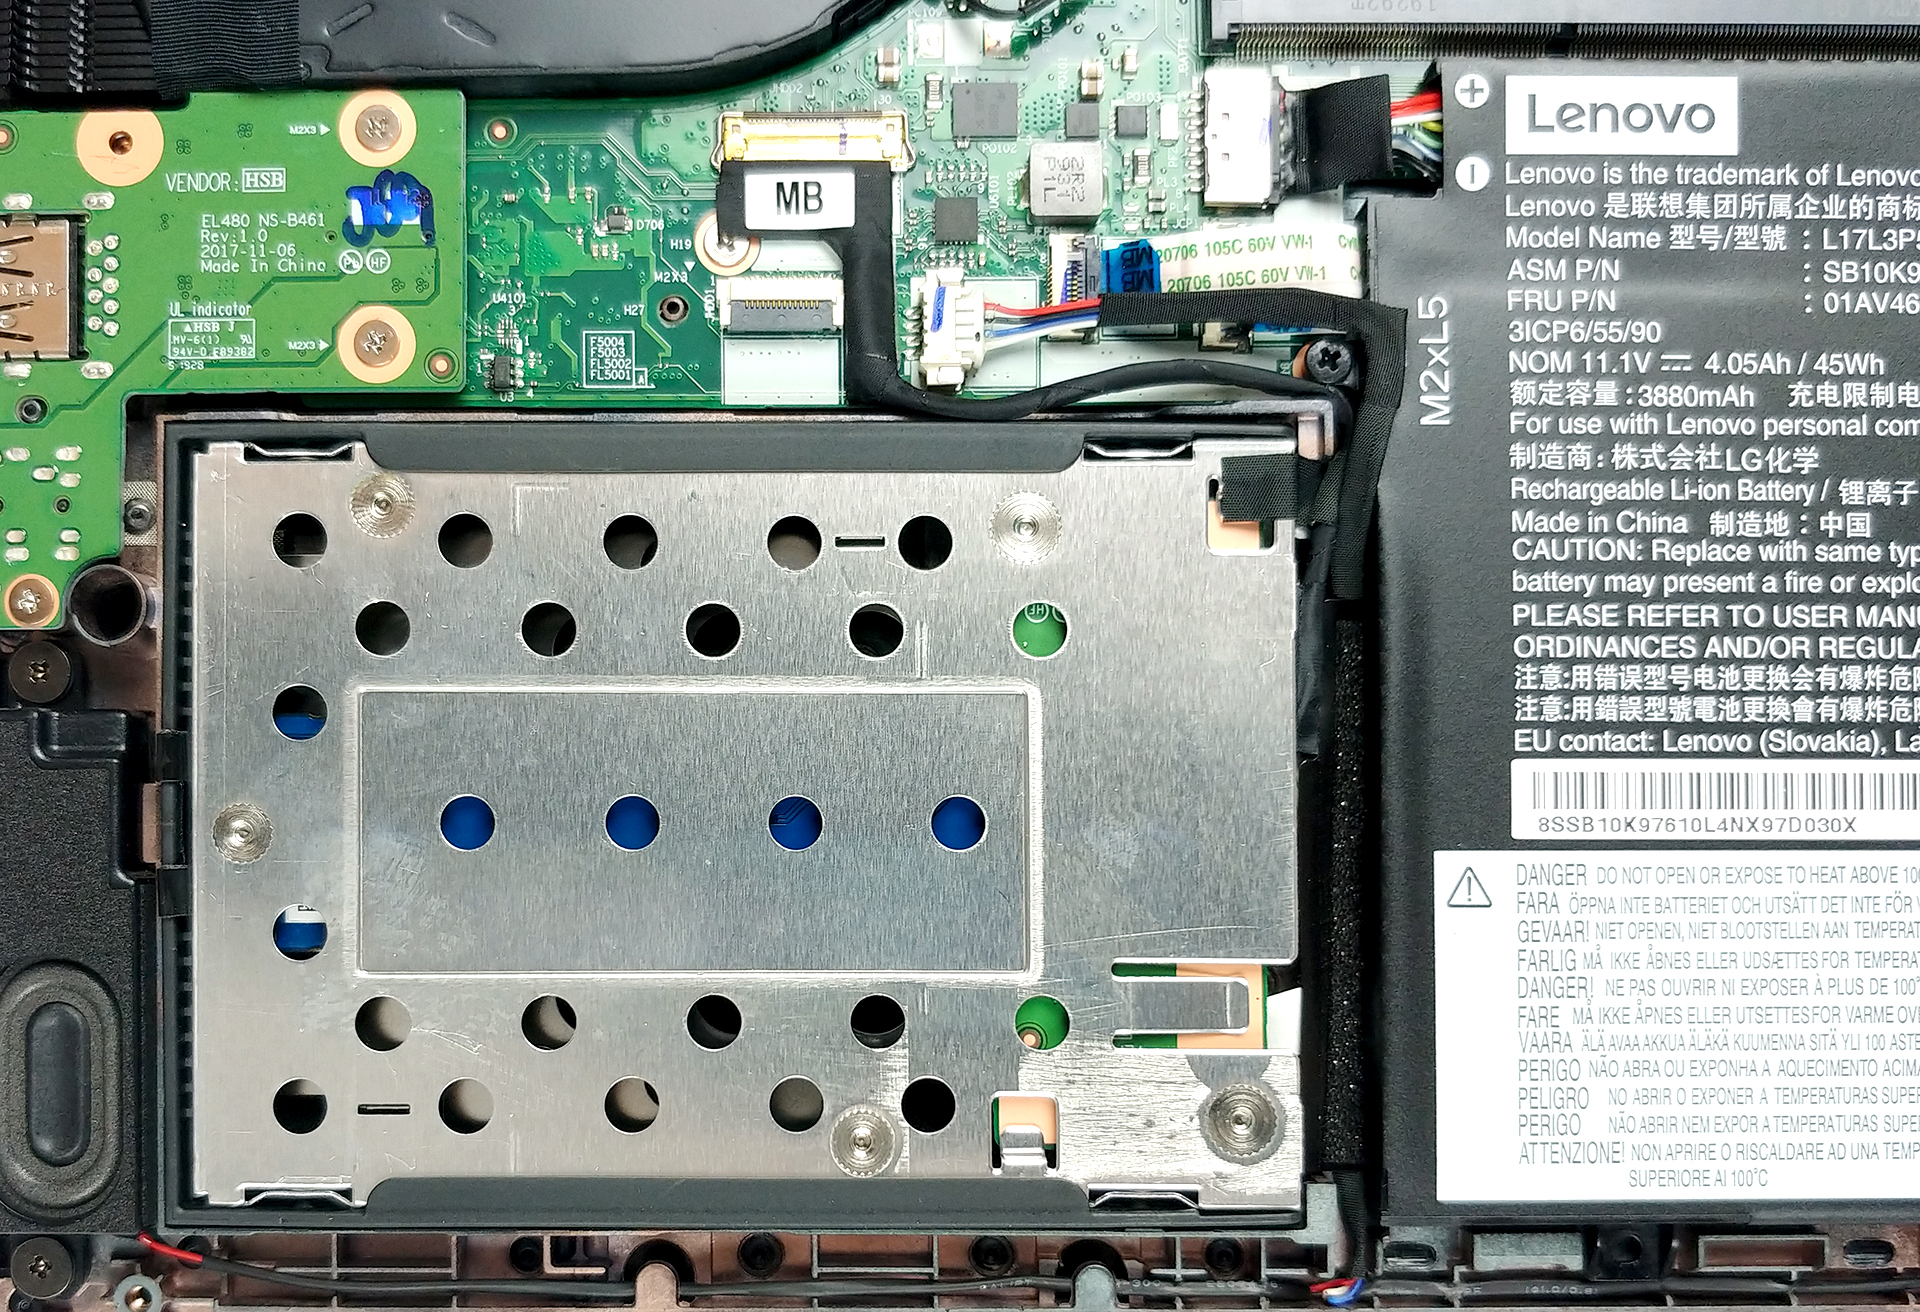 Værdiløs snack sød Inside Lenovo ThinkPad L490 - disassembly and upgrade options |  LaptopMedia.com